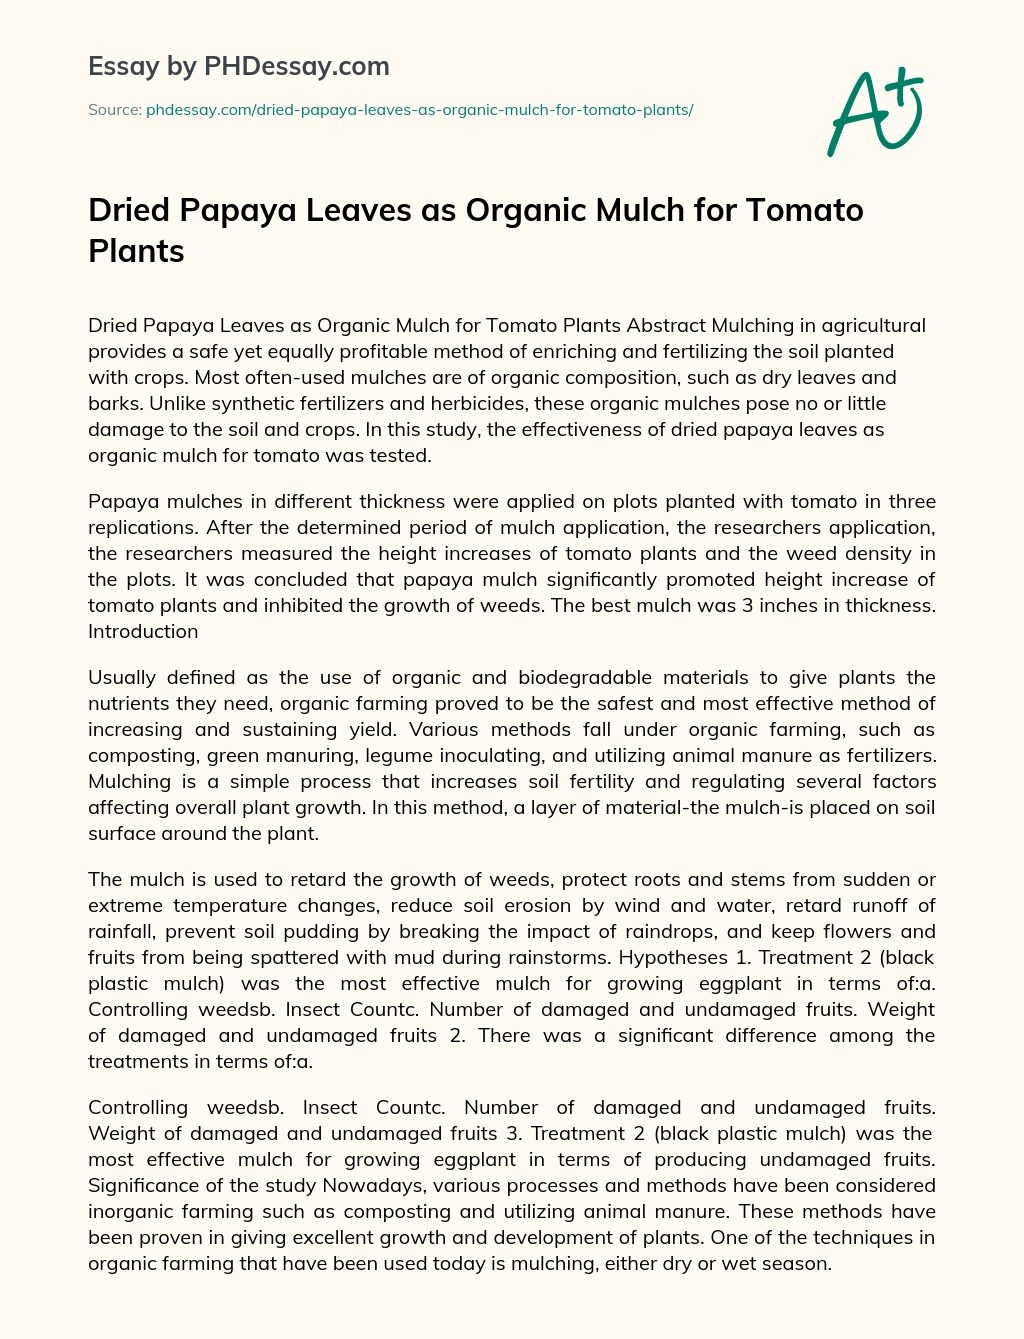 Dried Papaya Leaves as Organic Mulch for Tomato Plants essay